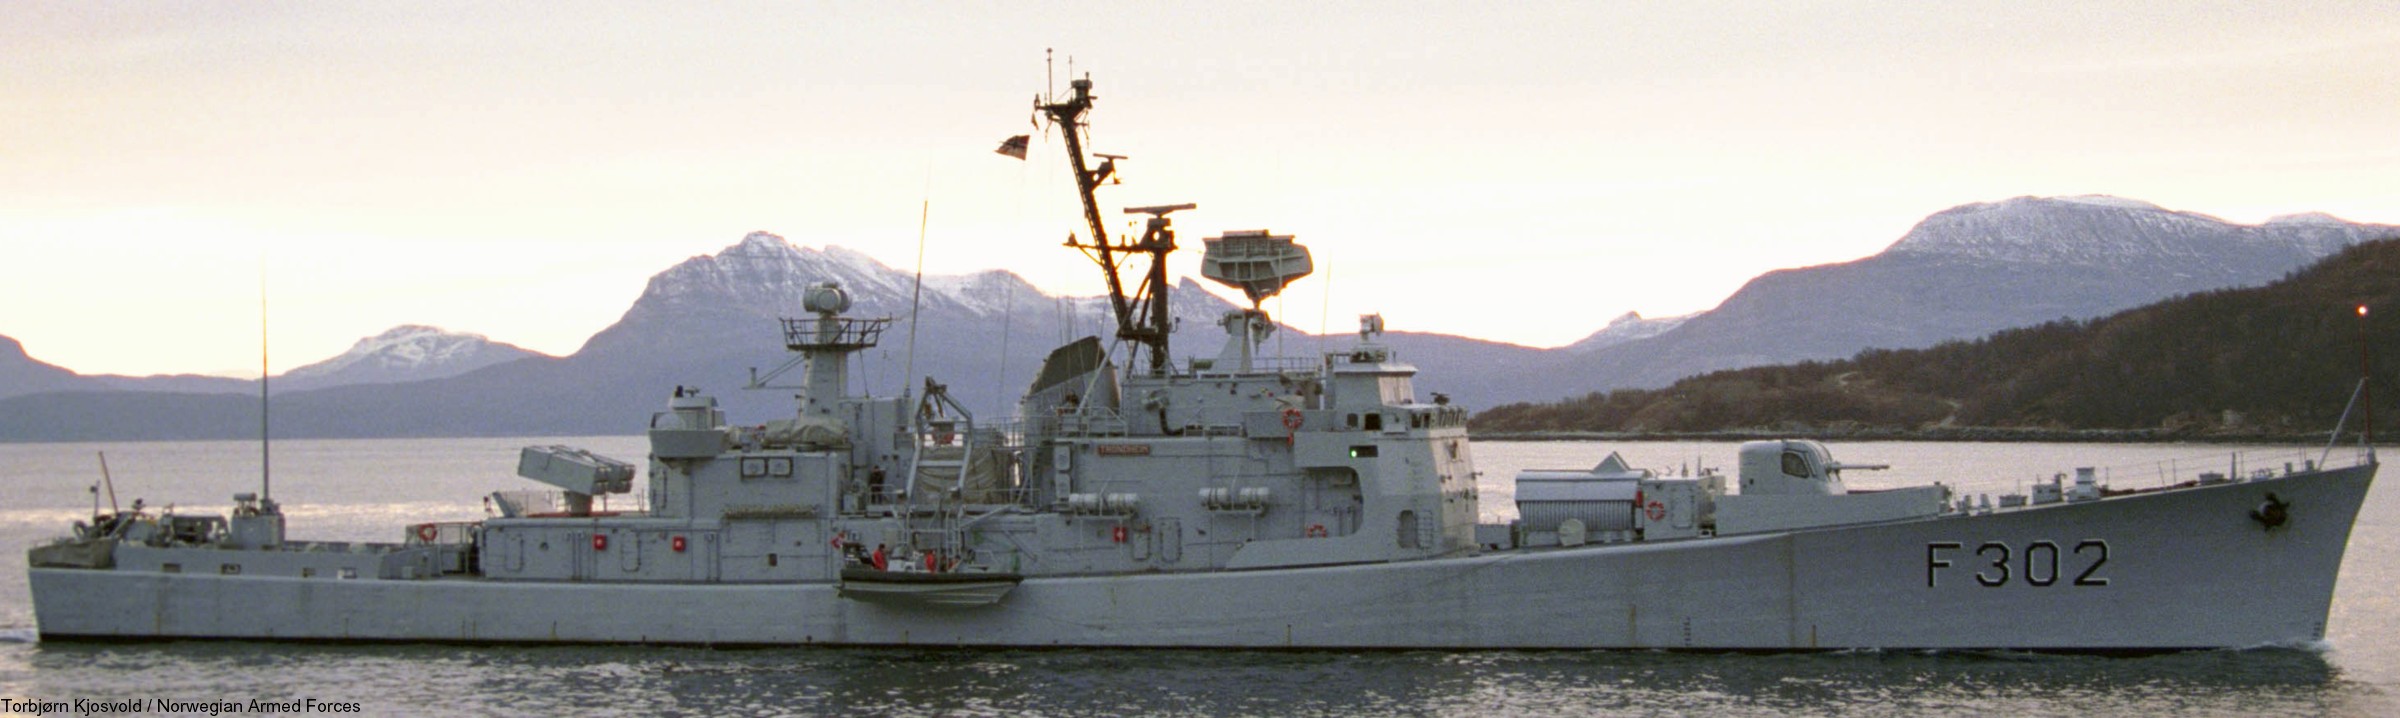 f-302 hnoms trondheim knm oslo class frigate royal norwegian navy sjoforsvaret 07